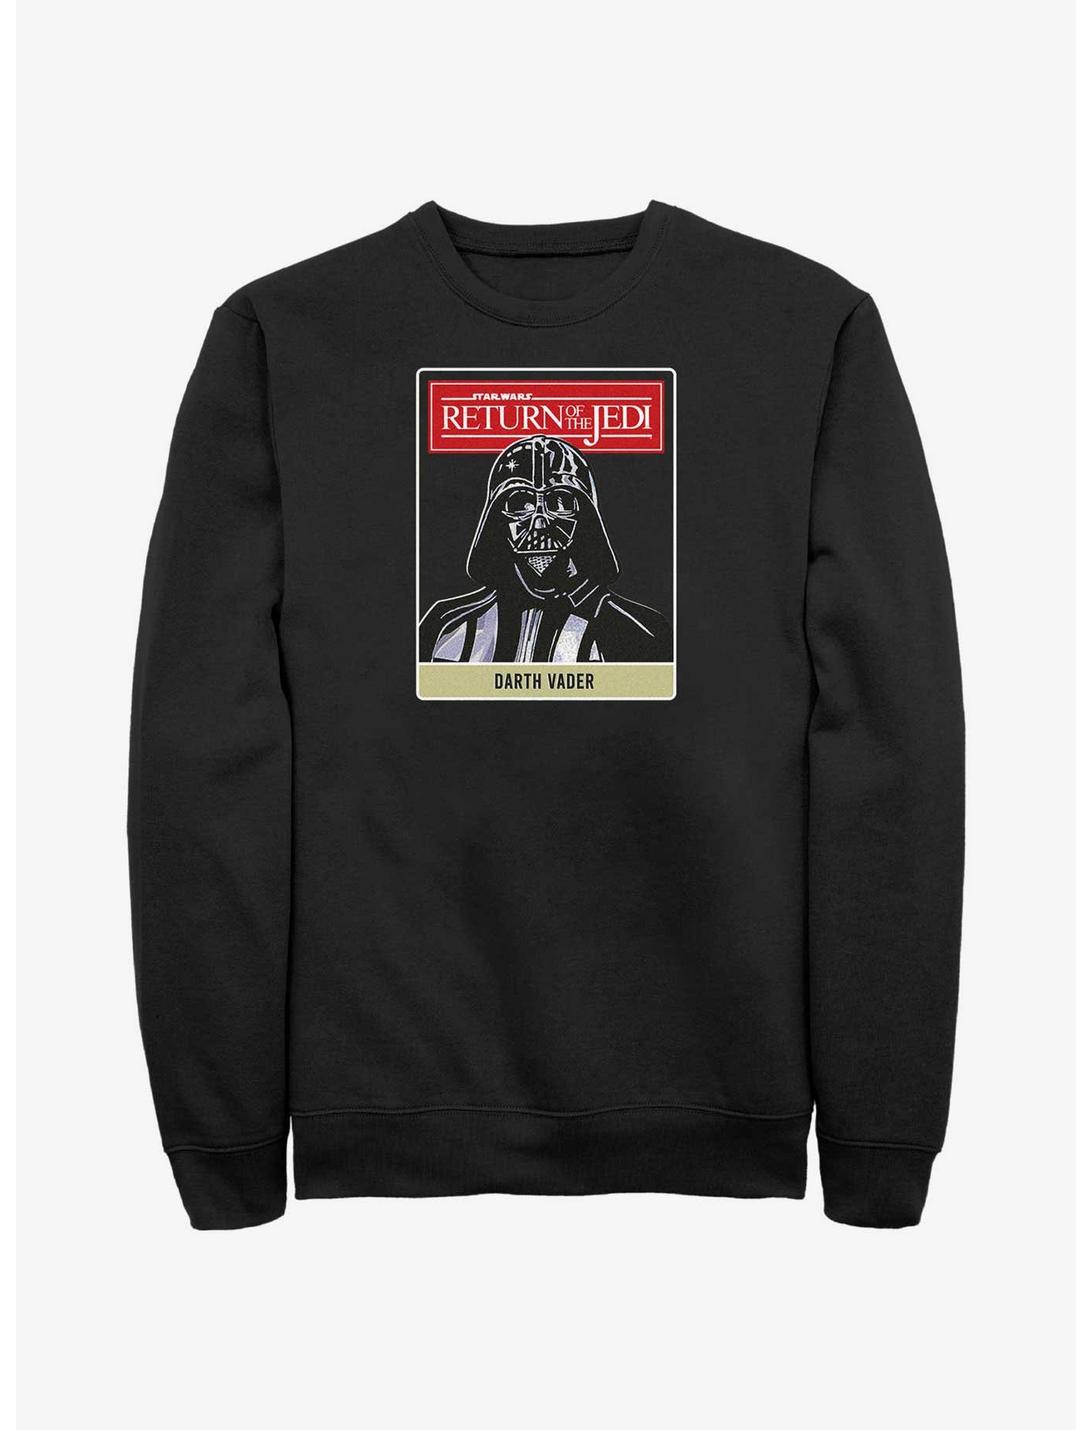 Star Wars Return of the Jedi 40th Anniversary Darth Vader Poster Sweatshirt, BLACK, hi-res